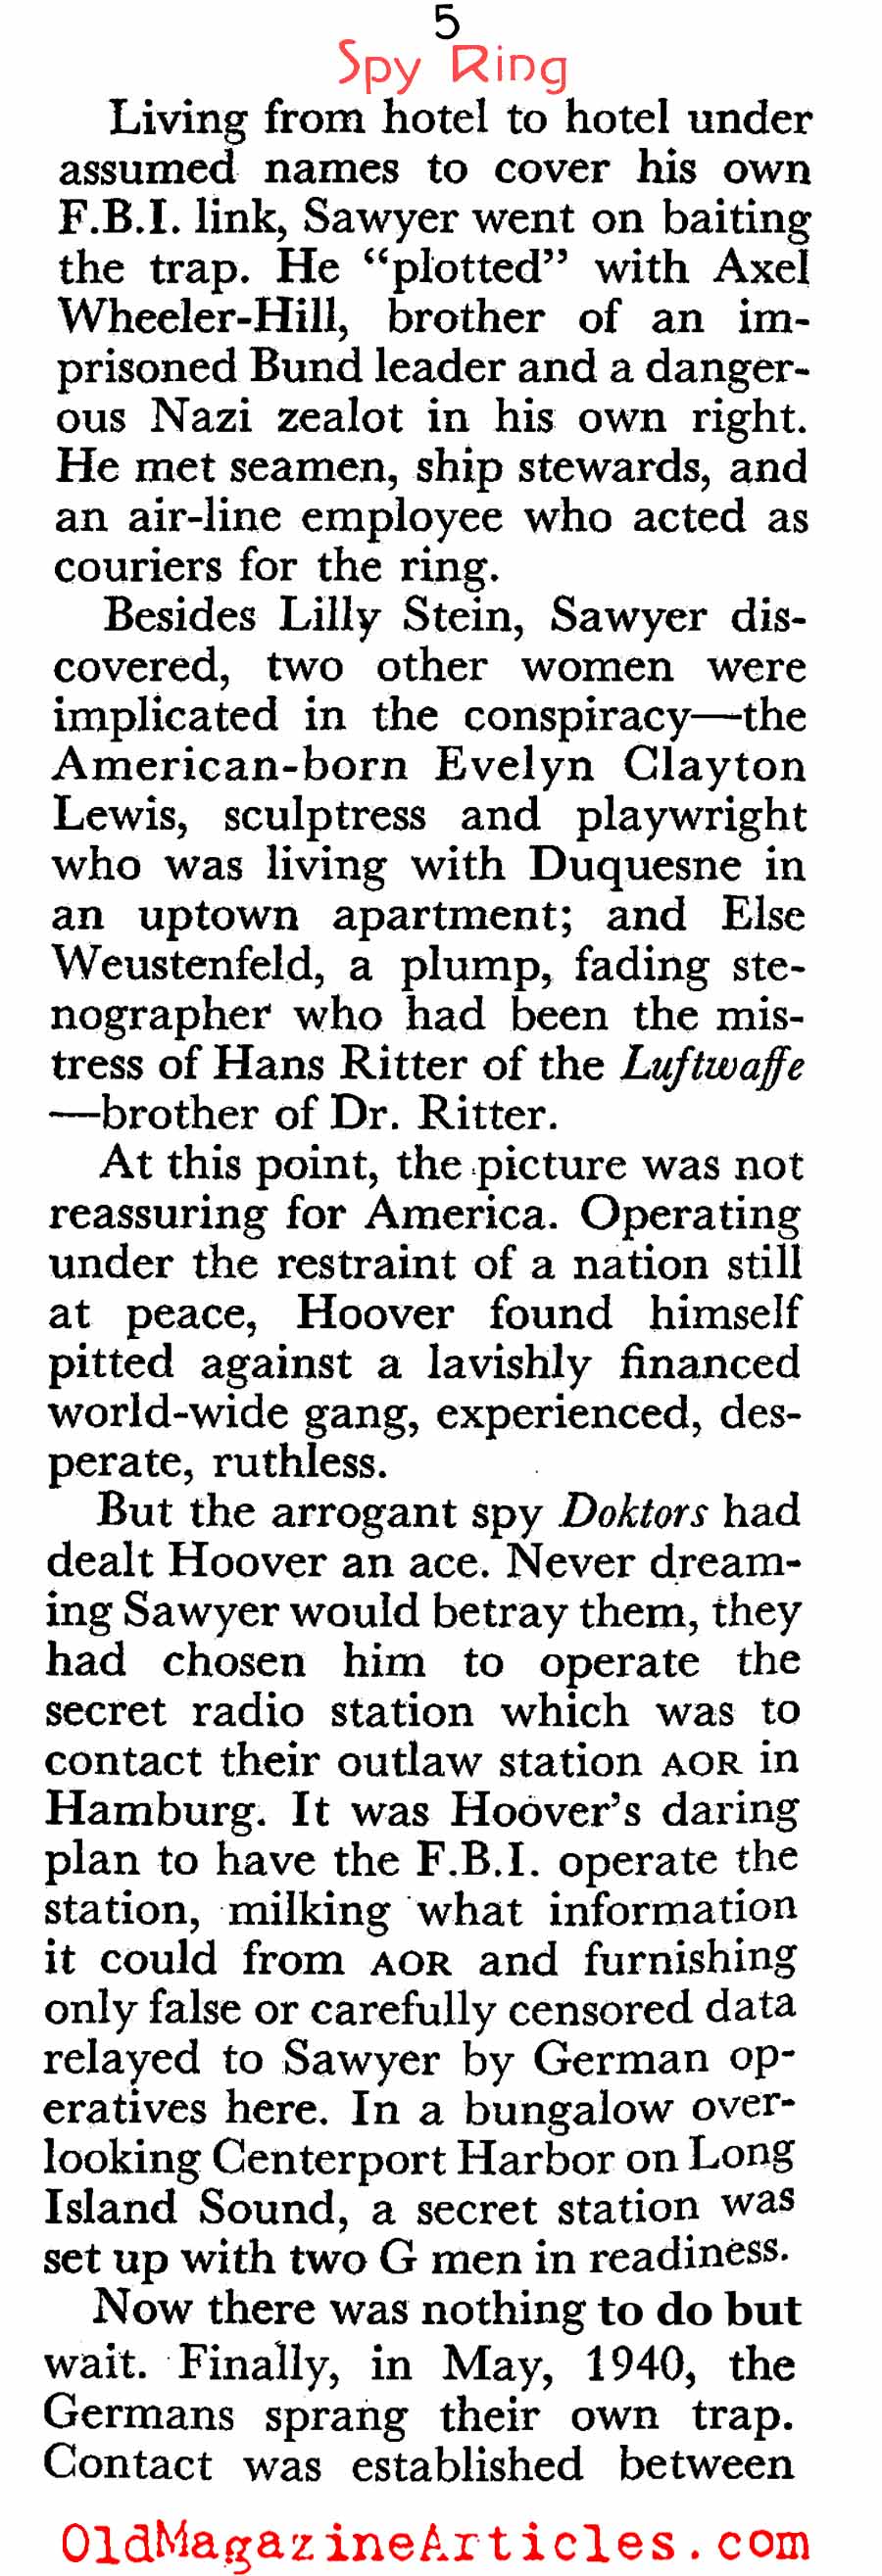 Counter-Espionage (Coronet Magazine, 1951)